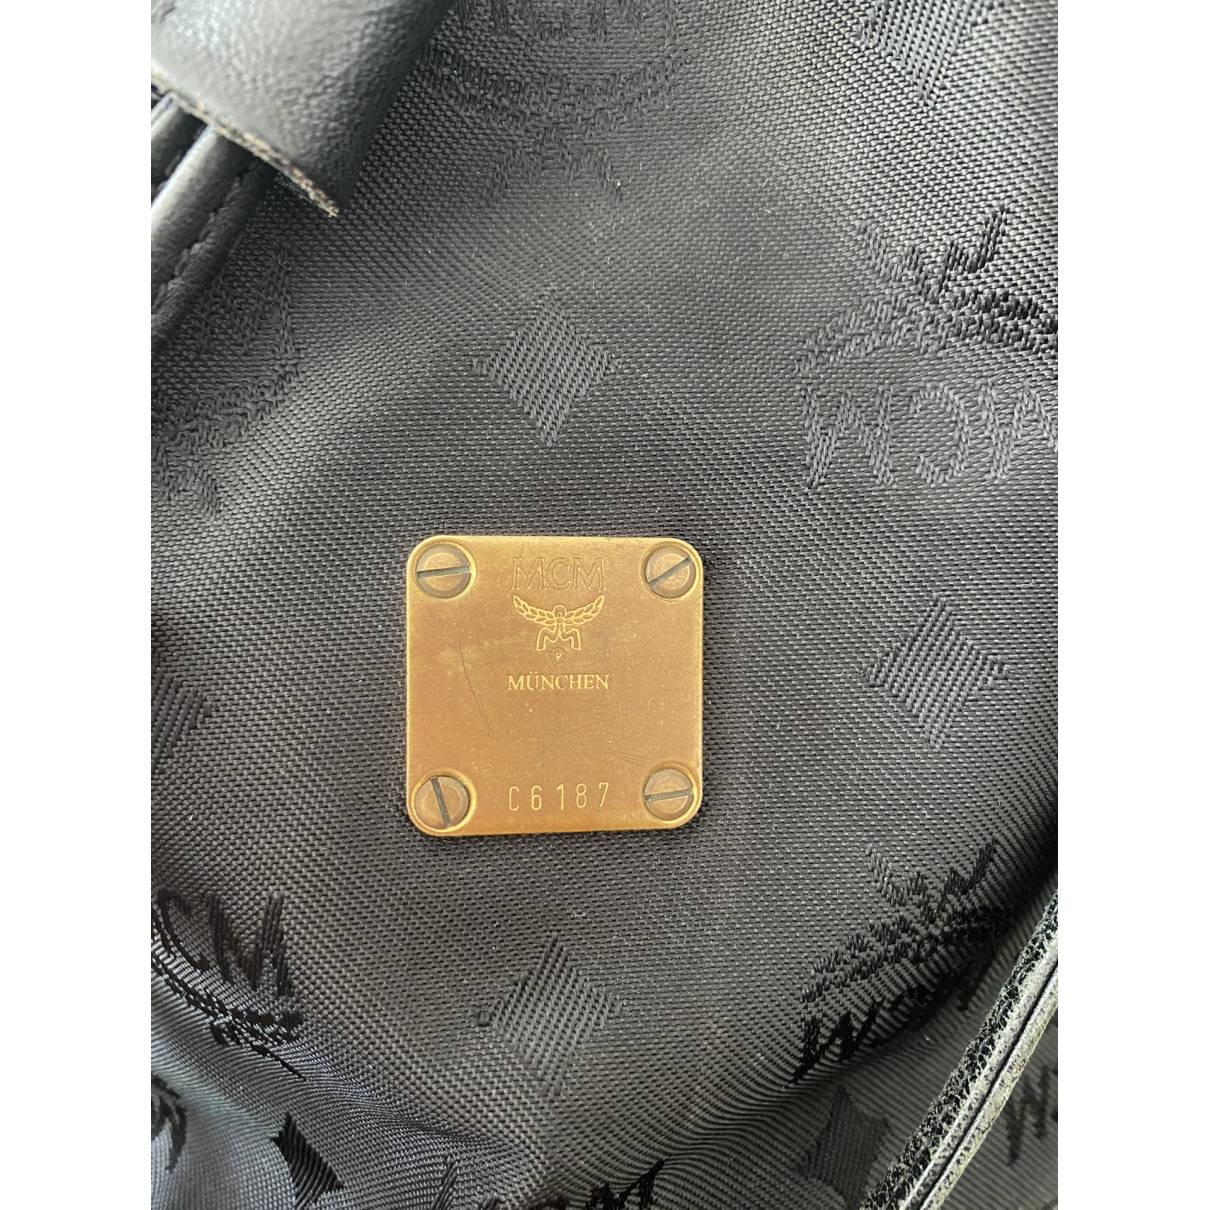 Buy MCM Cloth crossbody bag online